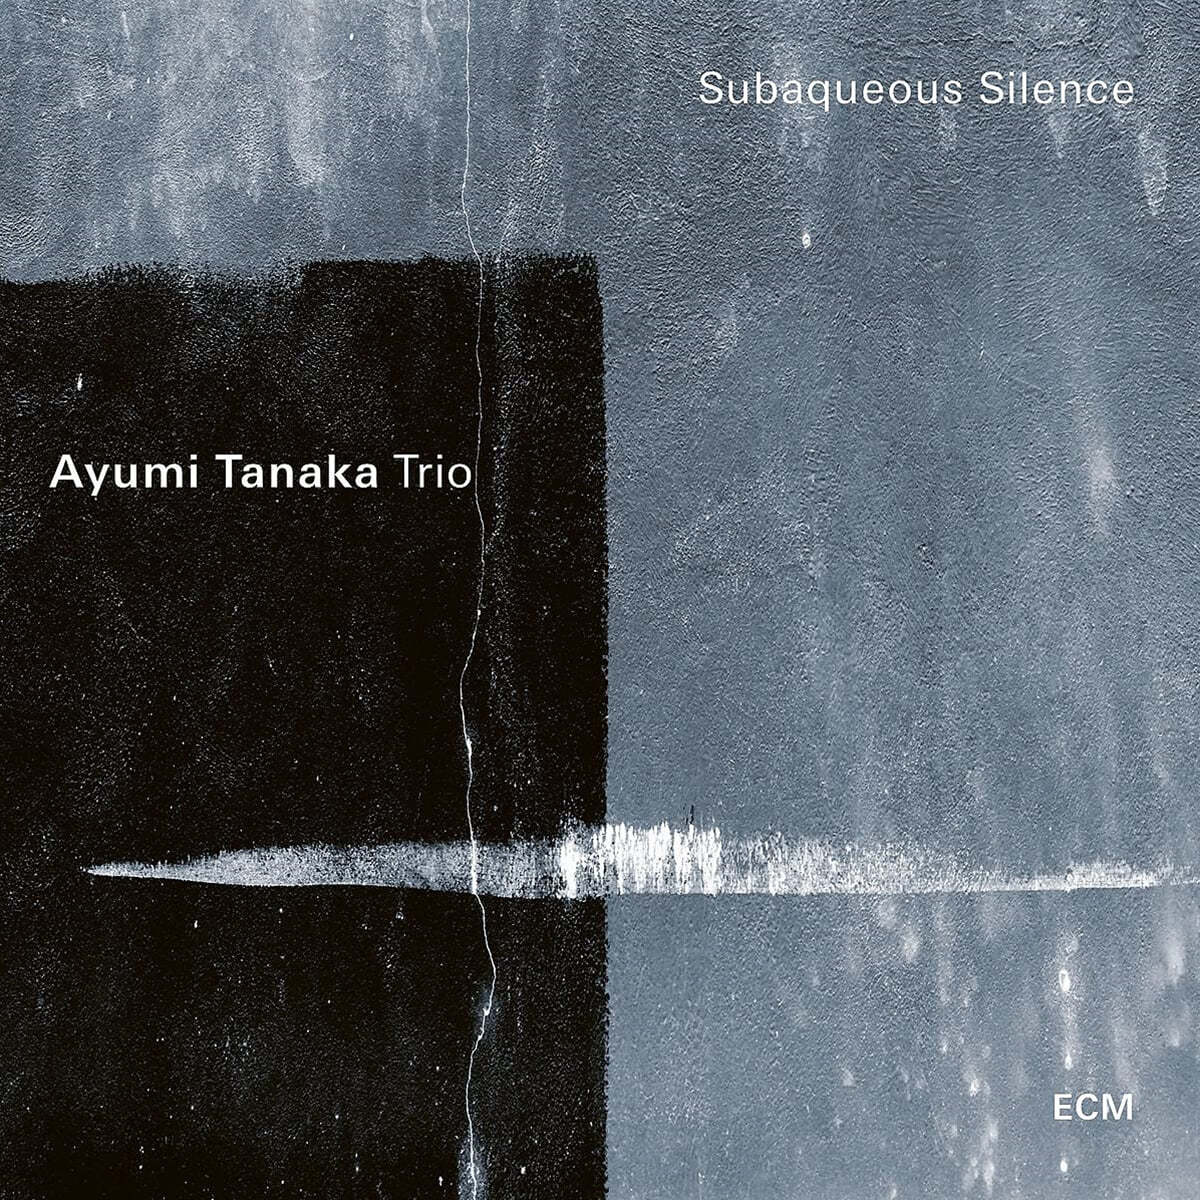 Ayumi Tanaka Trio (아유미 타나카 트리오) - Subaqueous Silence 